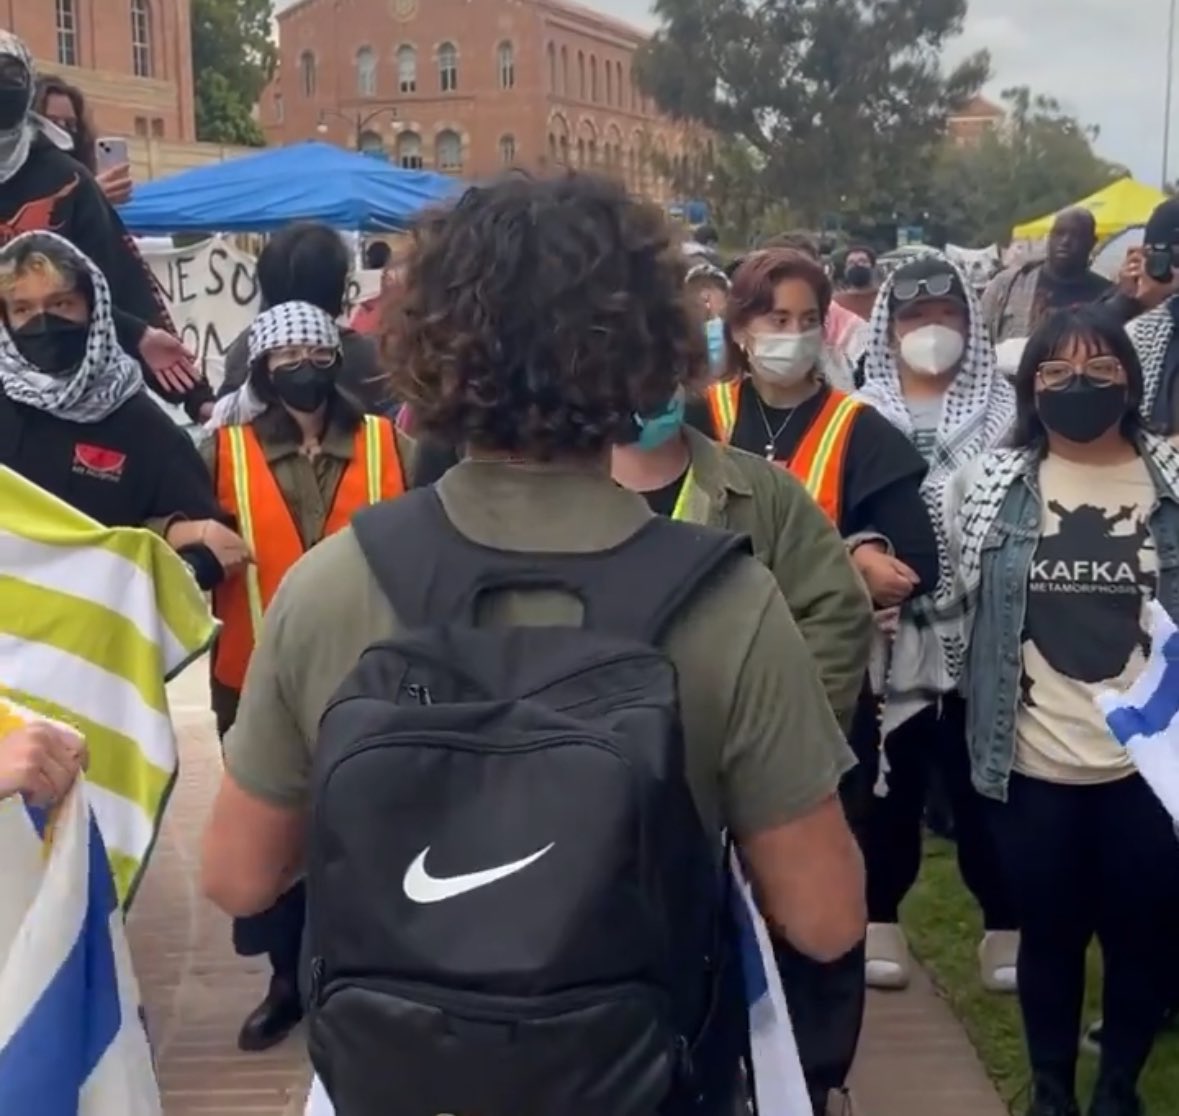 𝟏𝟗𝟑𝟖: Nazi Brownshirts block Jewish students from entering the University of Vienna. 𝟐𝟎𝟐𝟒 Palestine Brownshirts block a Jewish student from entering UCLA.